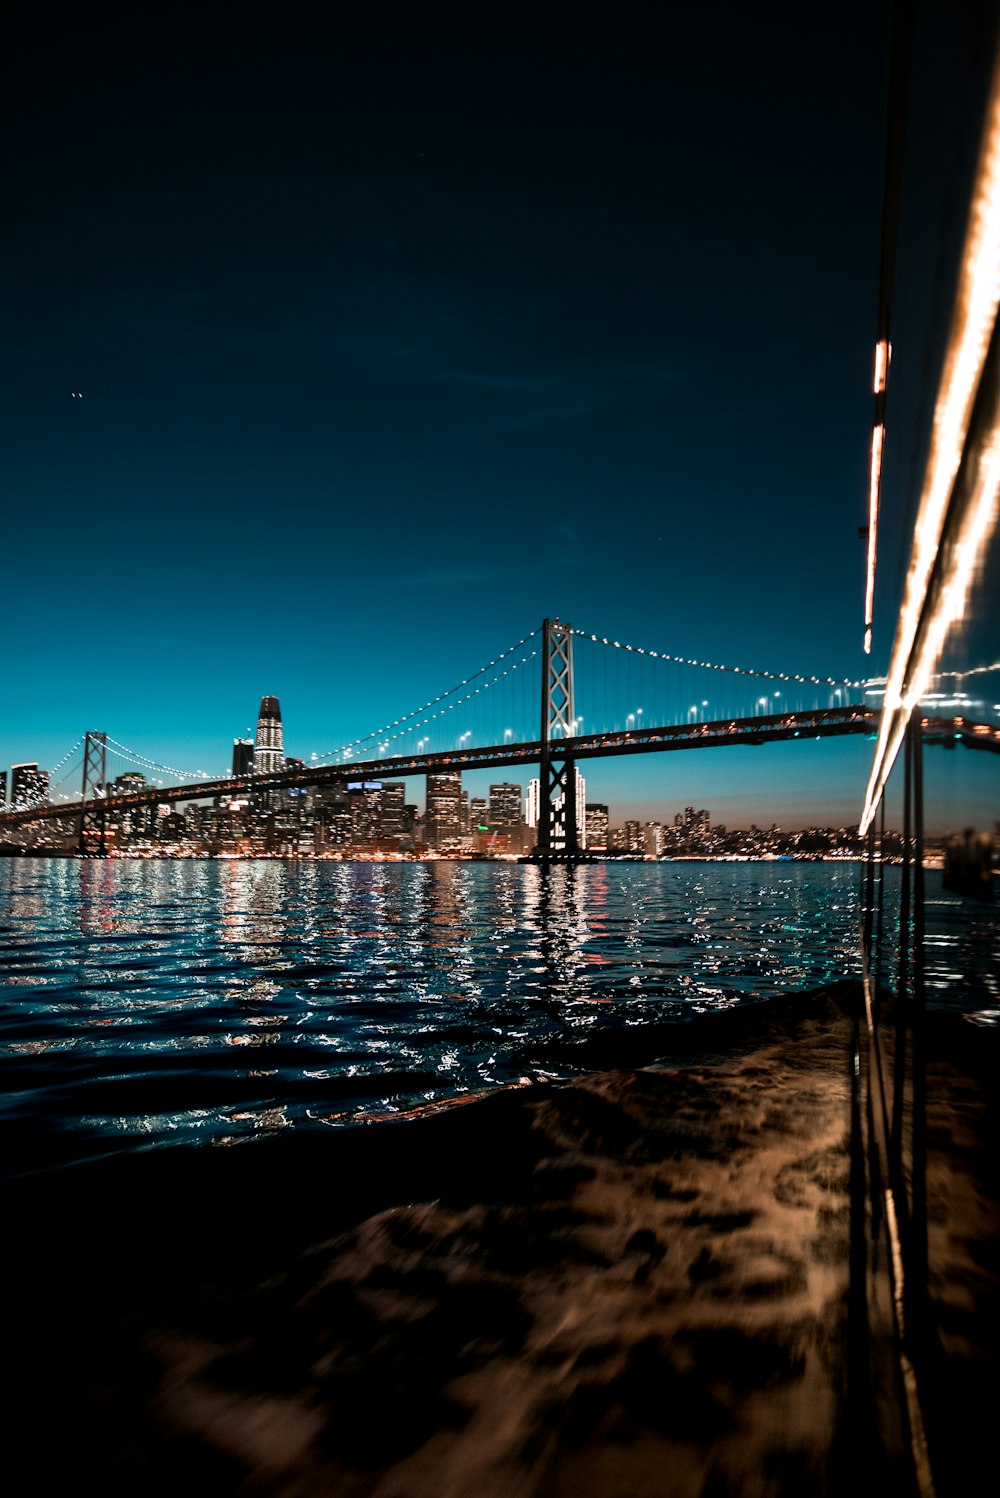 San Francisco-Oakland Bay Bridge, California during nighttime